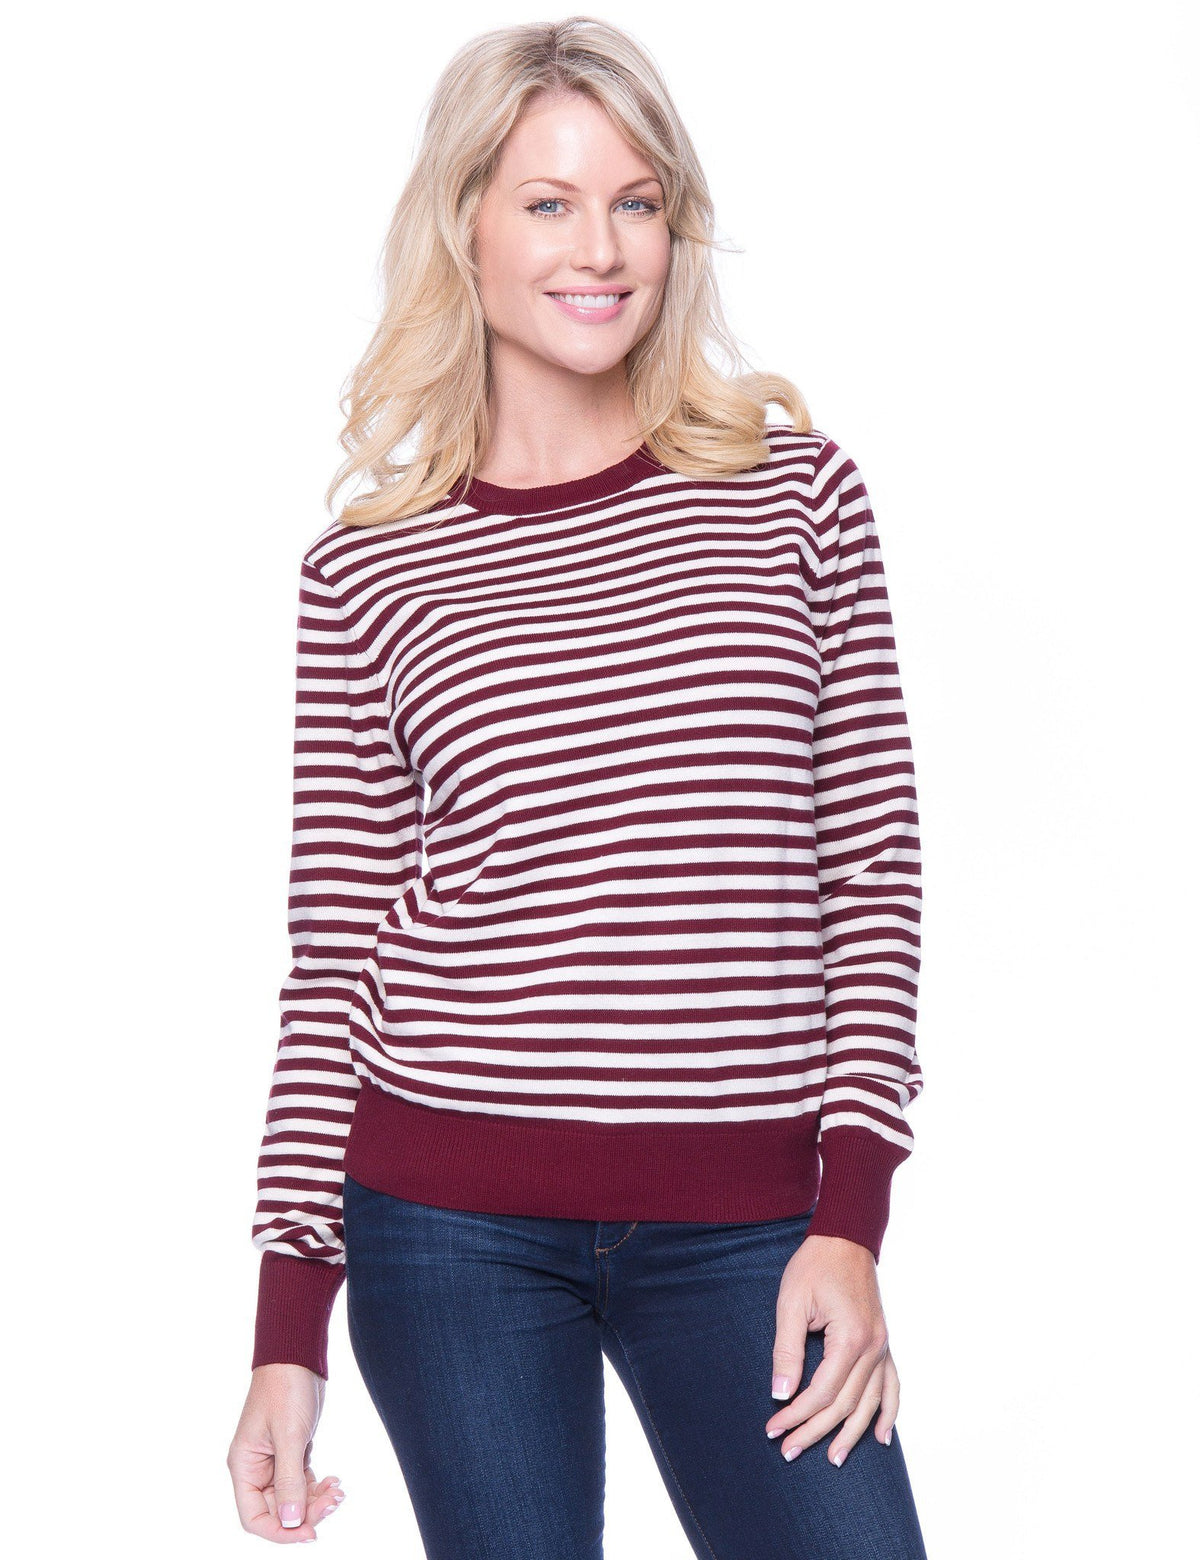 Women's Premium Cotton Crew Neck Sweater - Stripes Bordeaux/Ivory